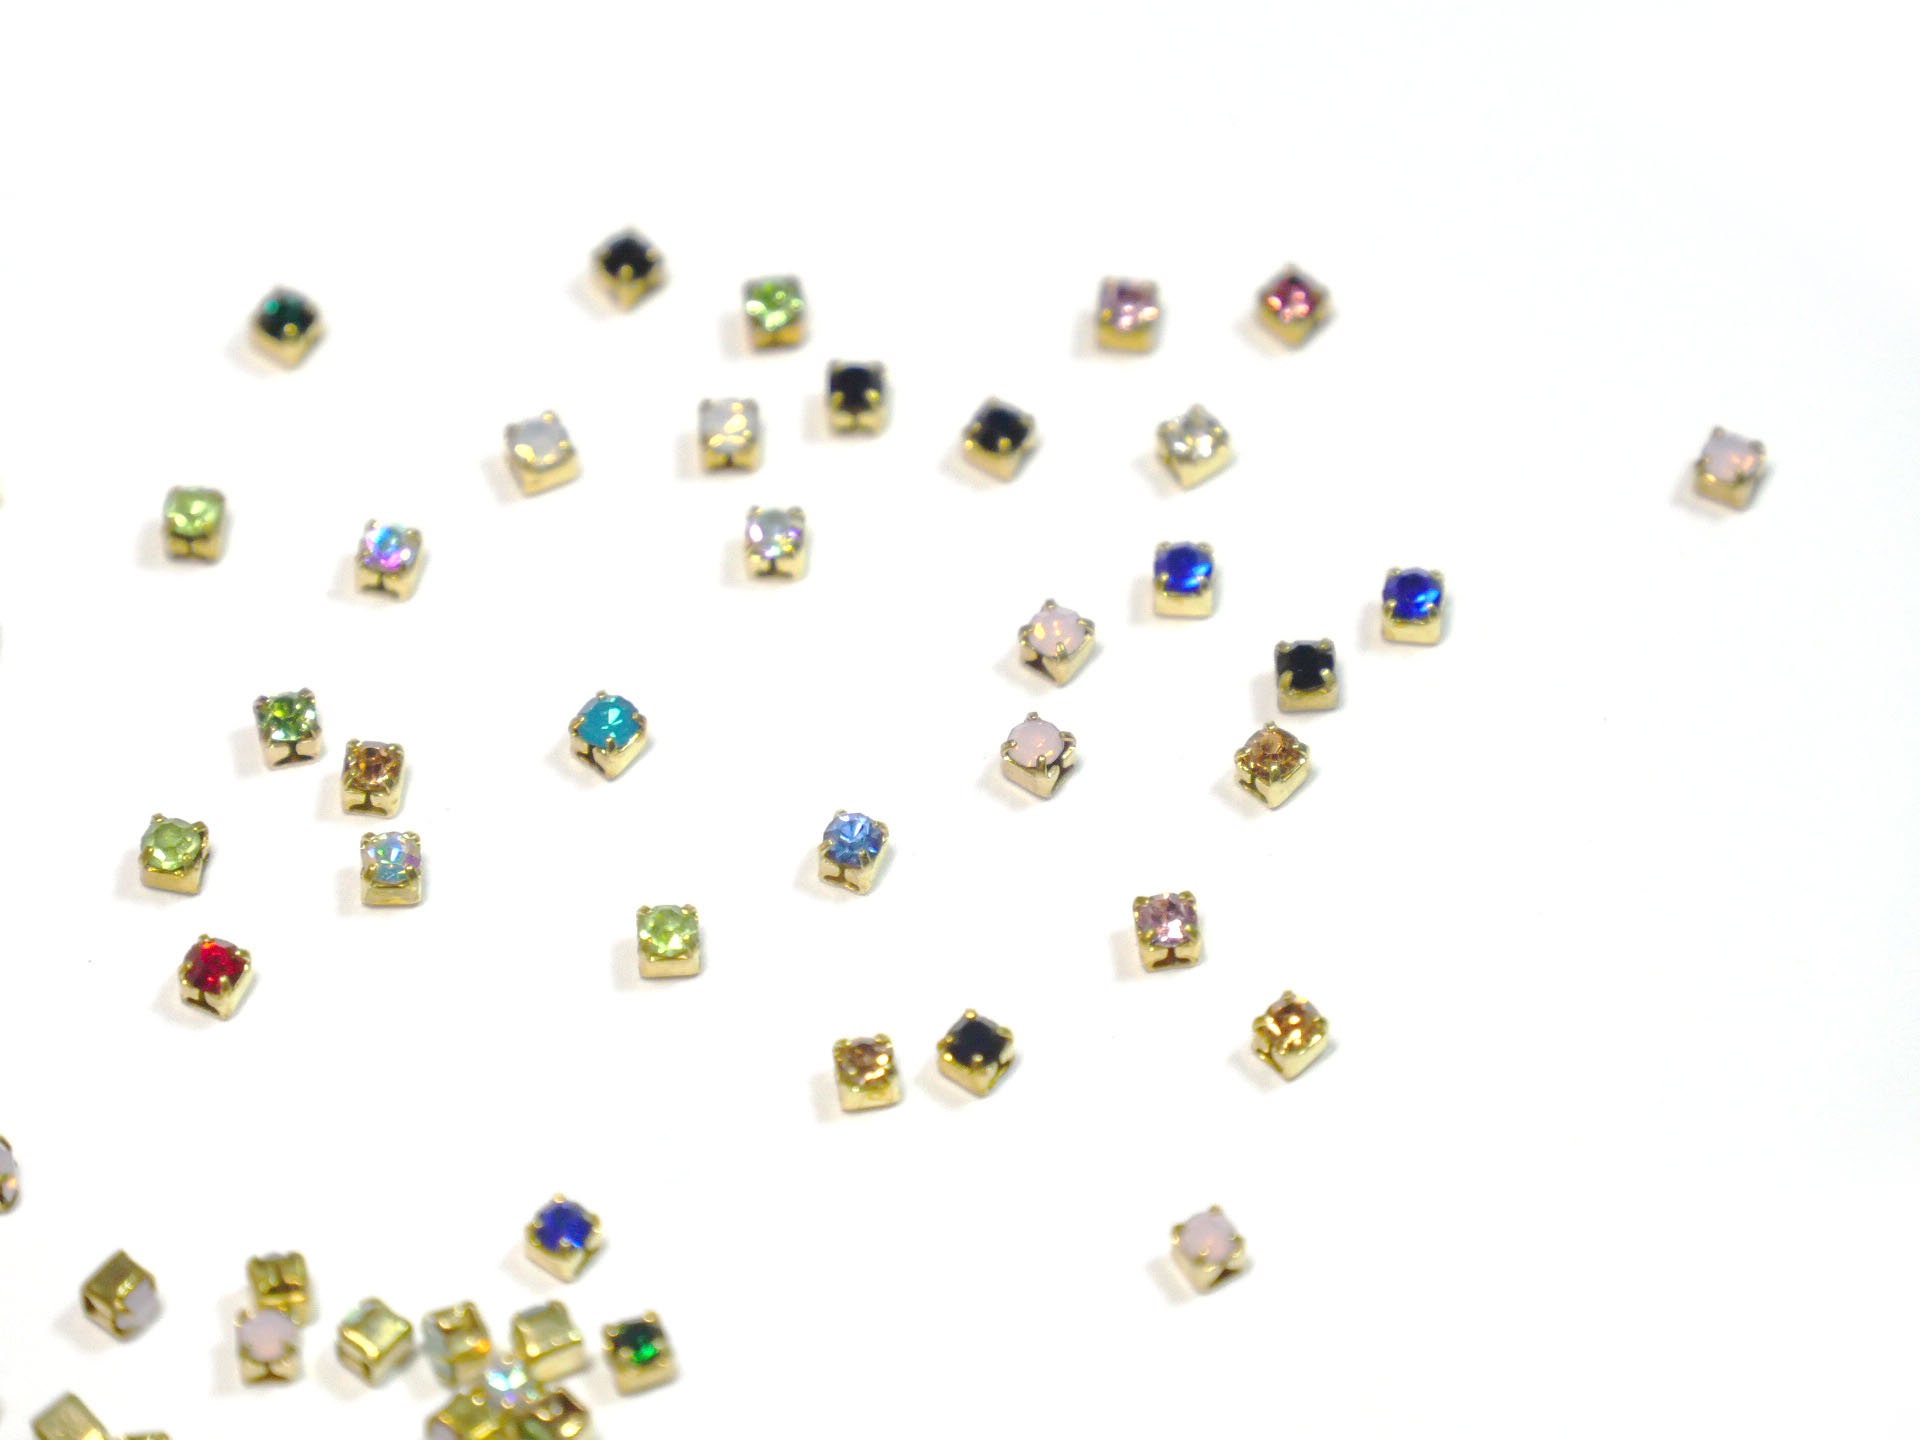 3600pcs Nail Art Rhinestone Crystal Yellow Rhinestones Beads Nail Jewels  Nail Design Round Flatback Gems Stones Studs 6 Sizes With Box For Nail  Design